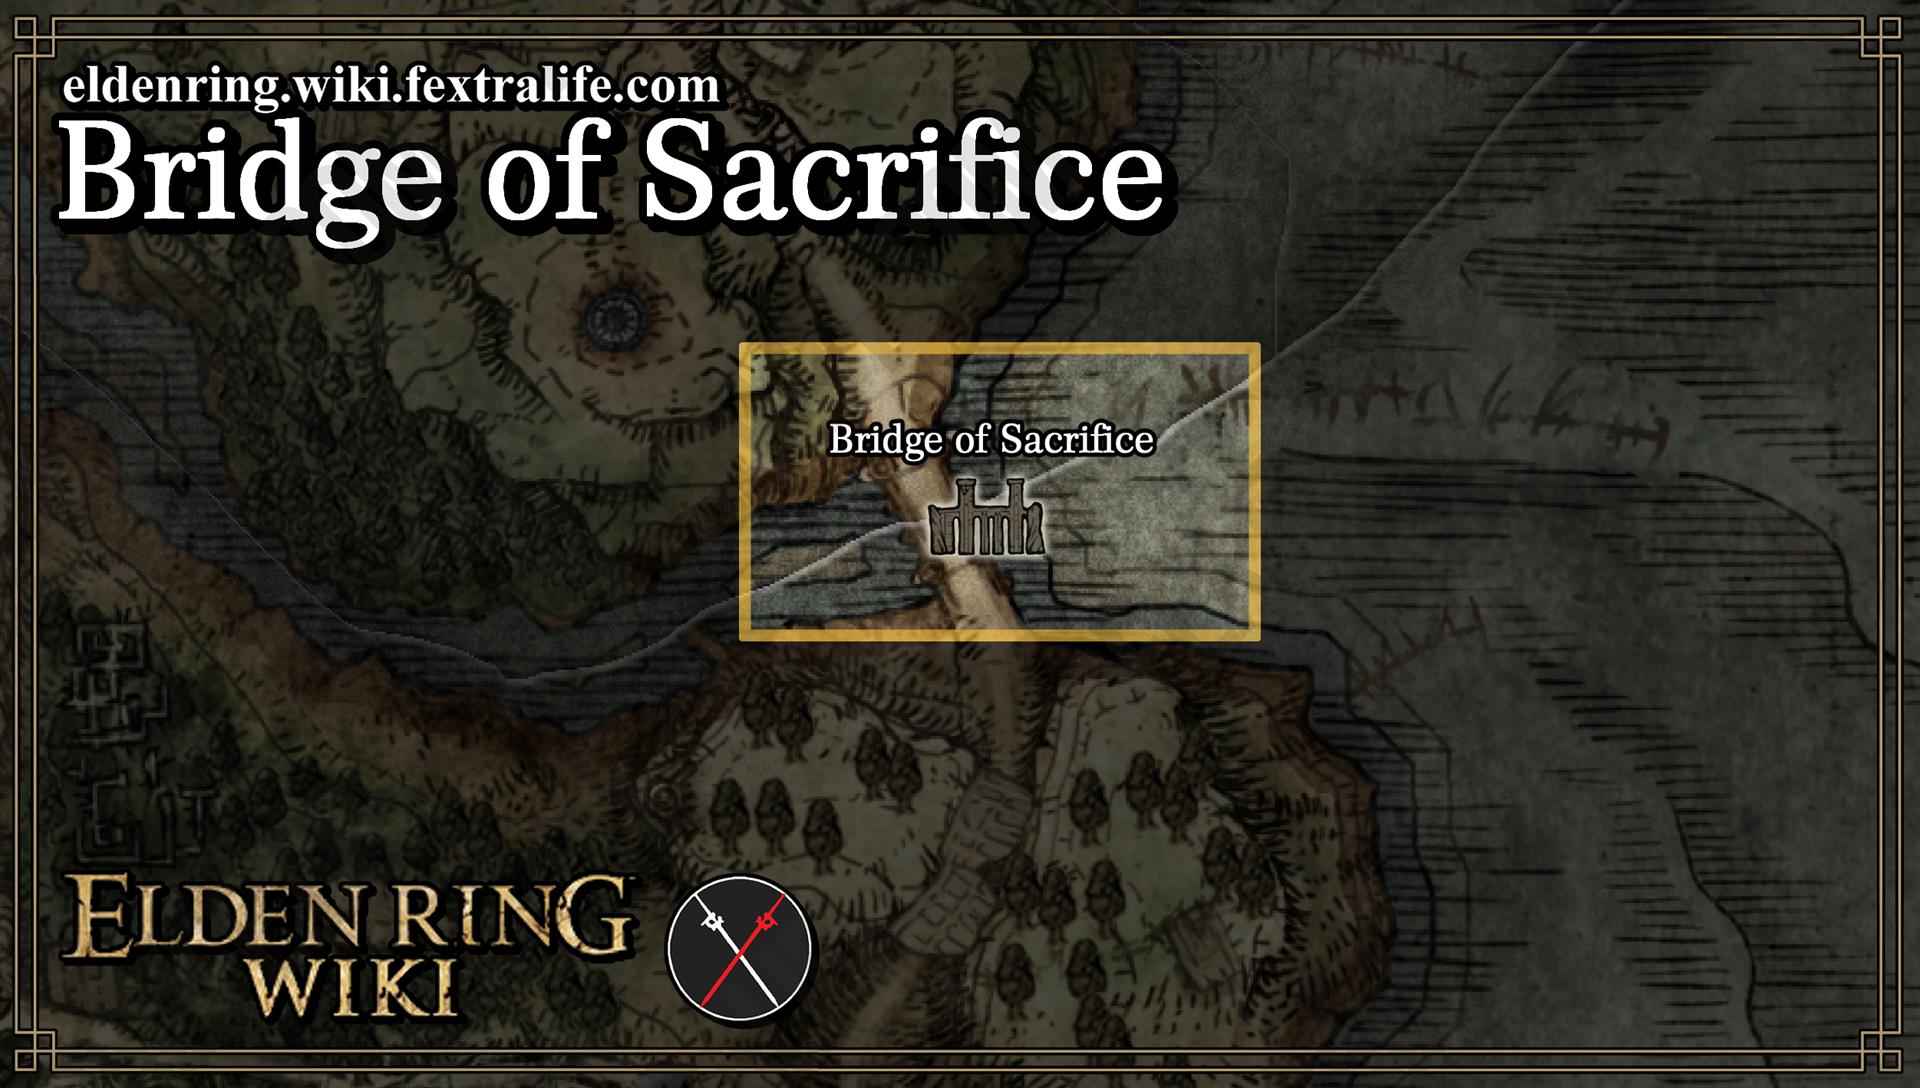 Bridge of Sacrifice, Elden Ring Wiki